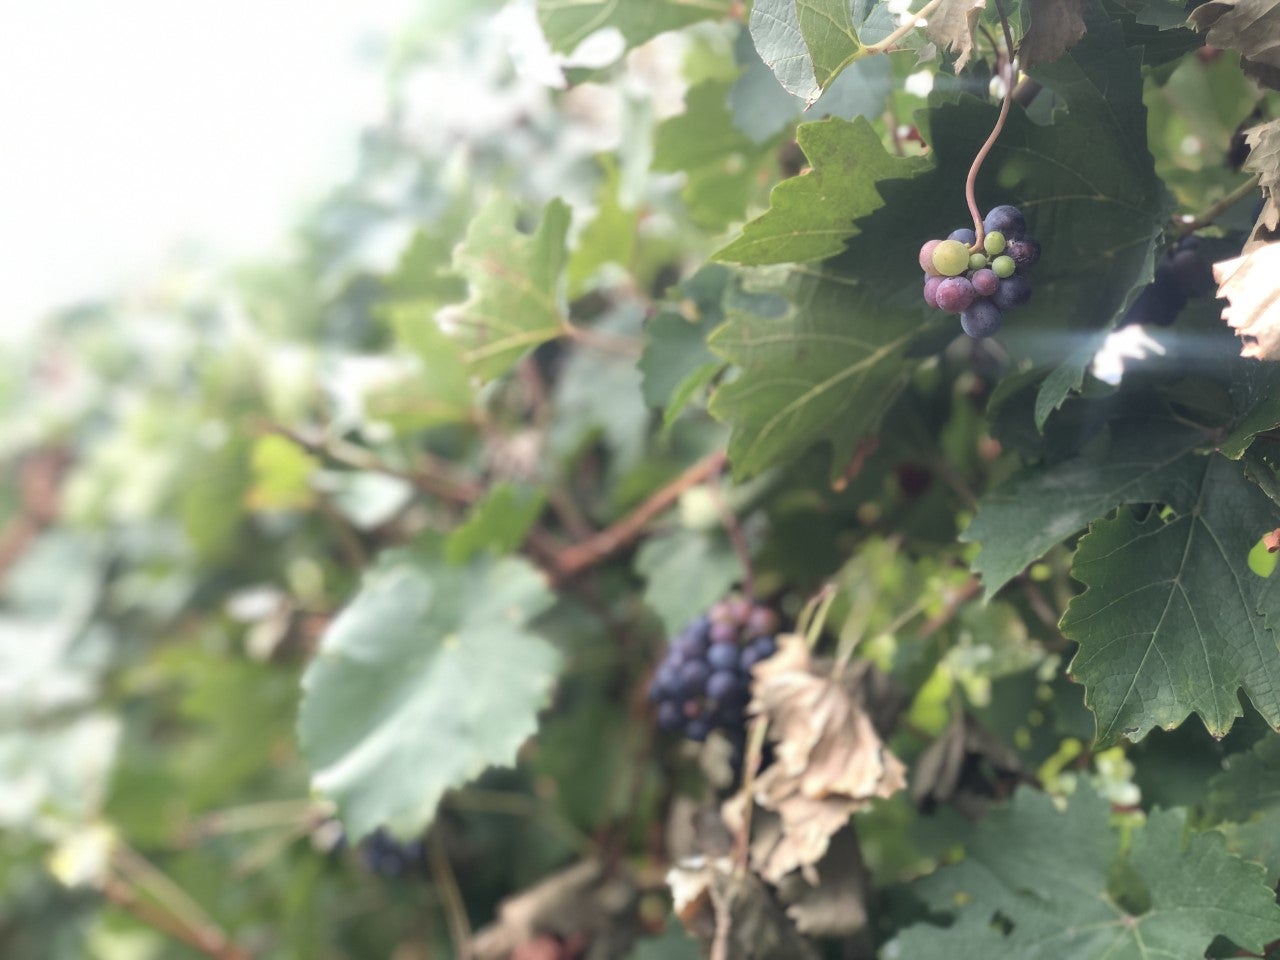 Grapes left on the vine after the early harvest at Masottina vineyard